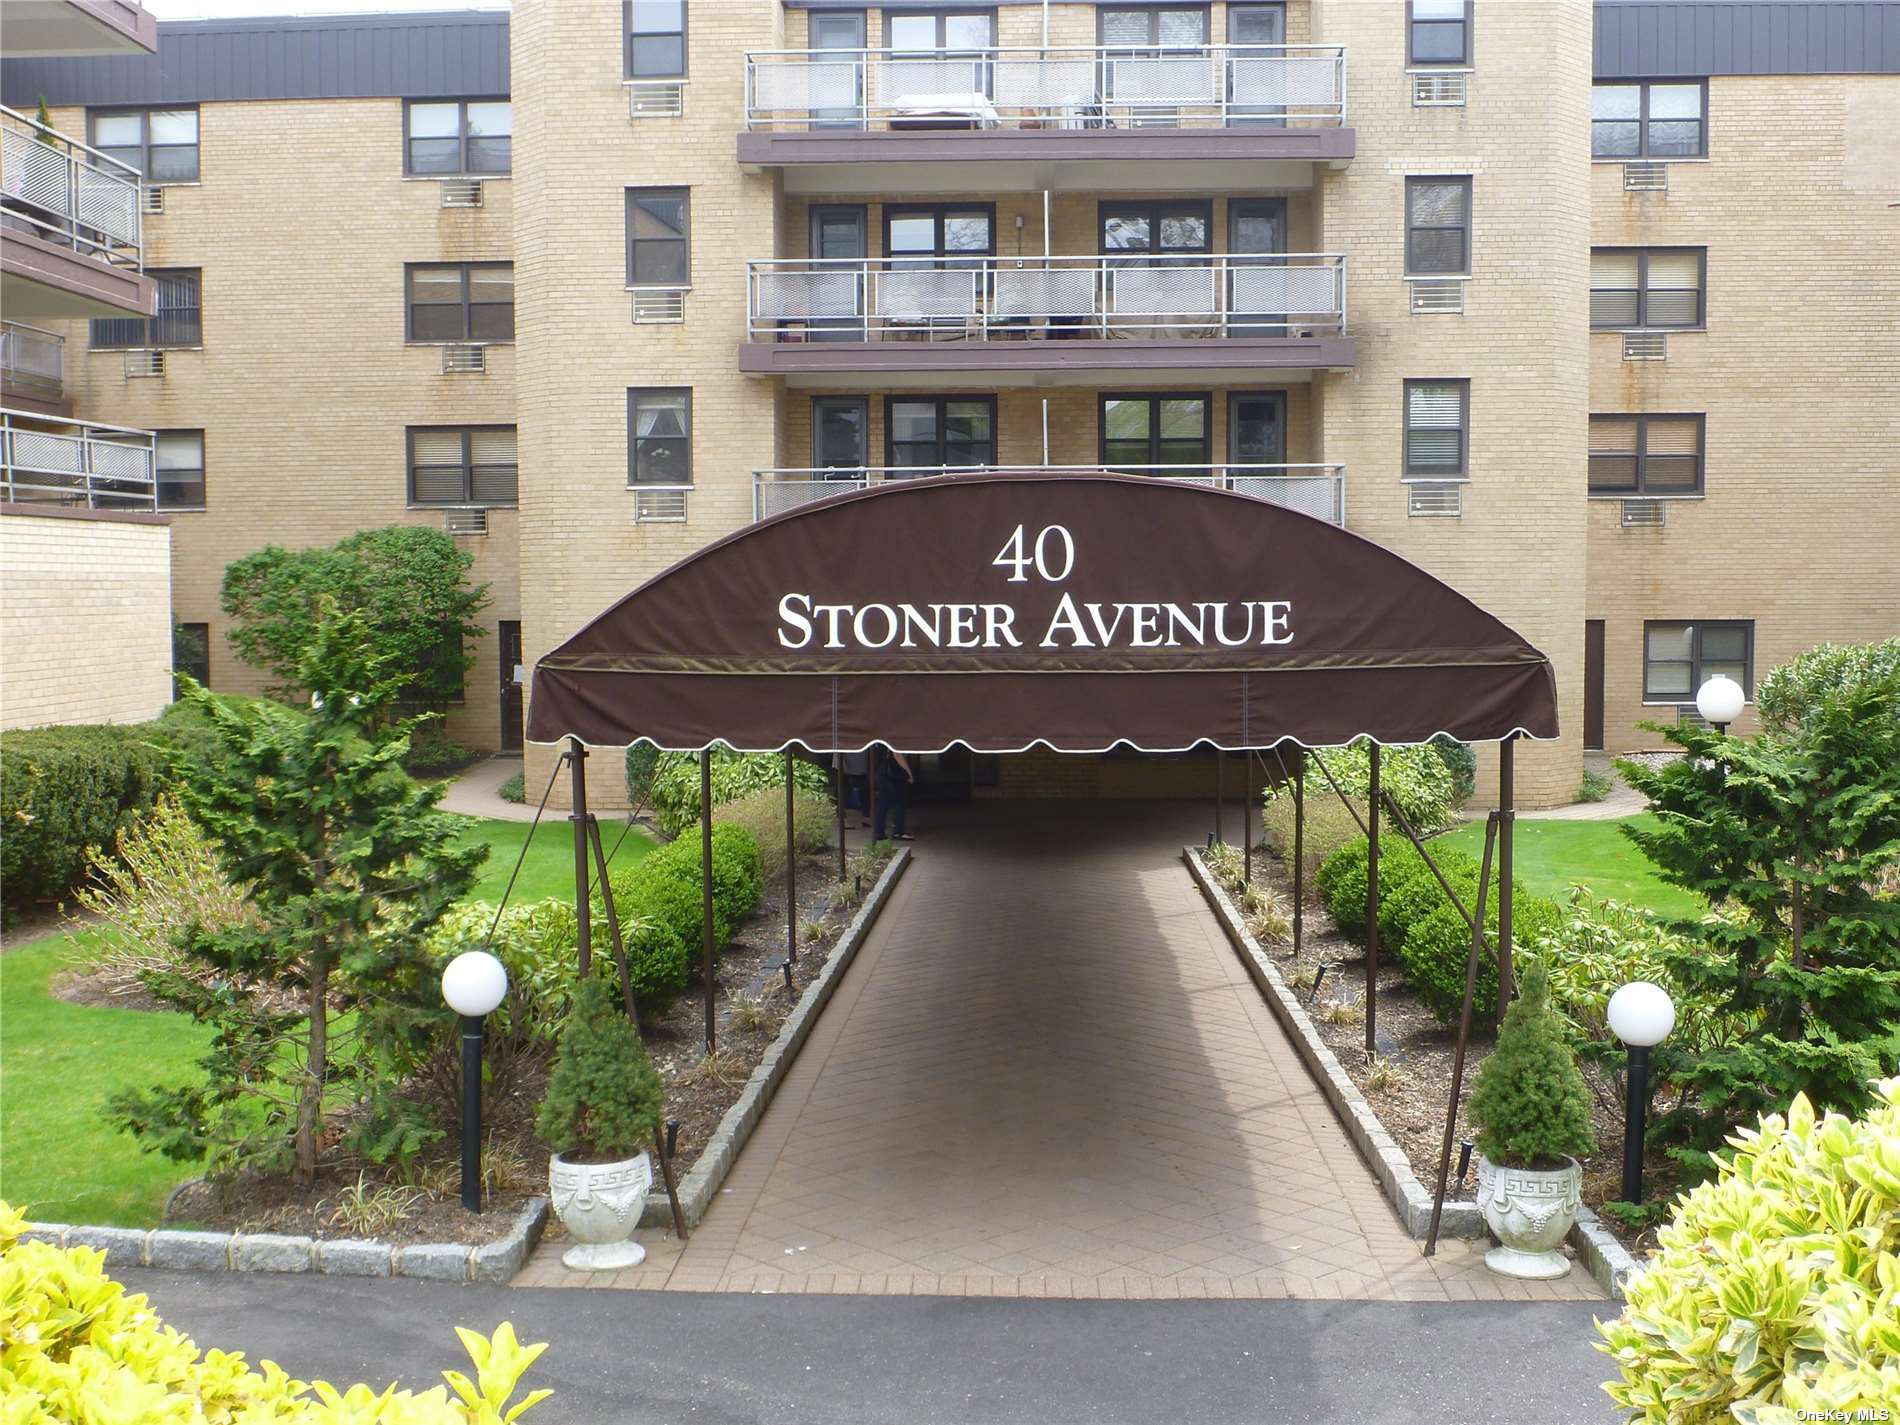 Photo 2 of 27 of 40 Stoner Avenue 2E co-op property